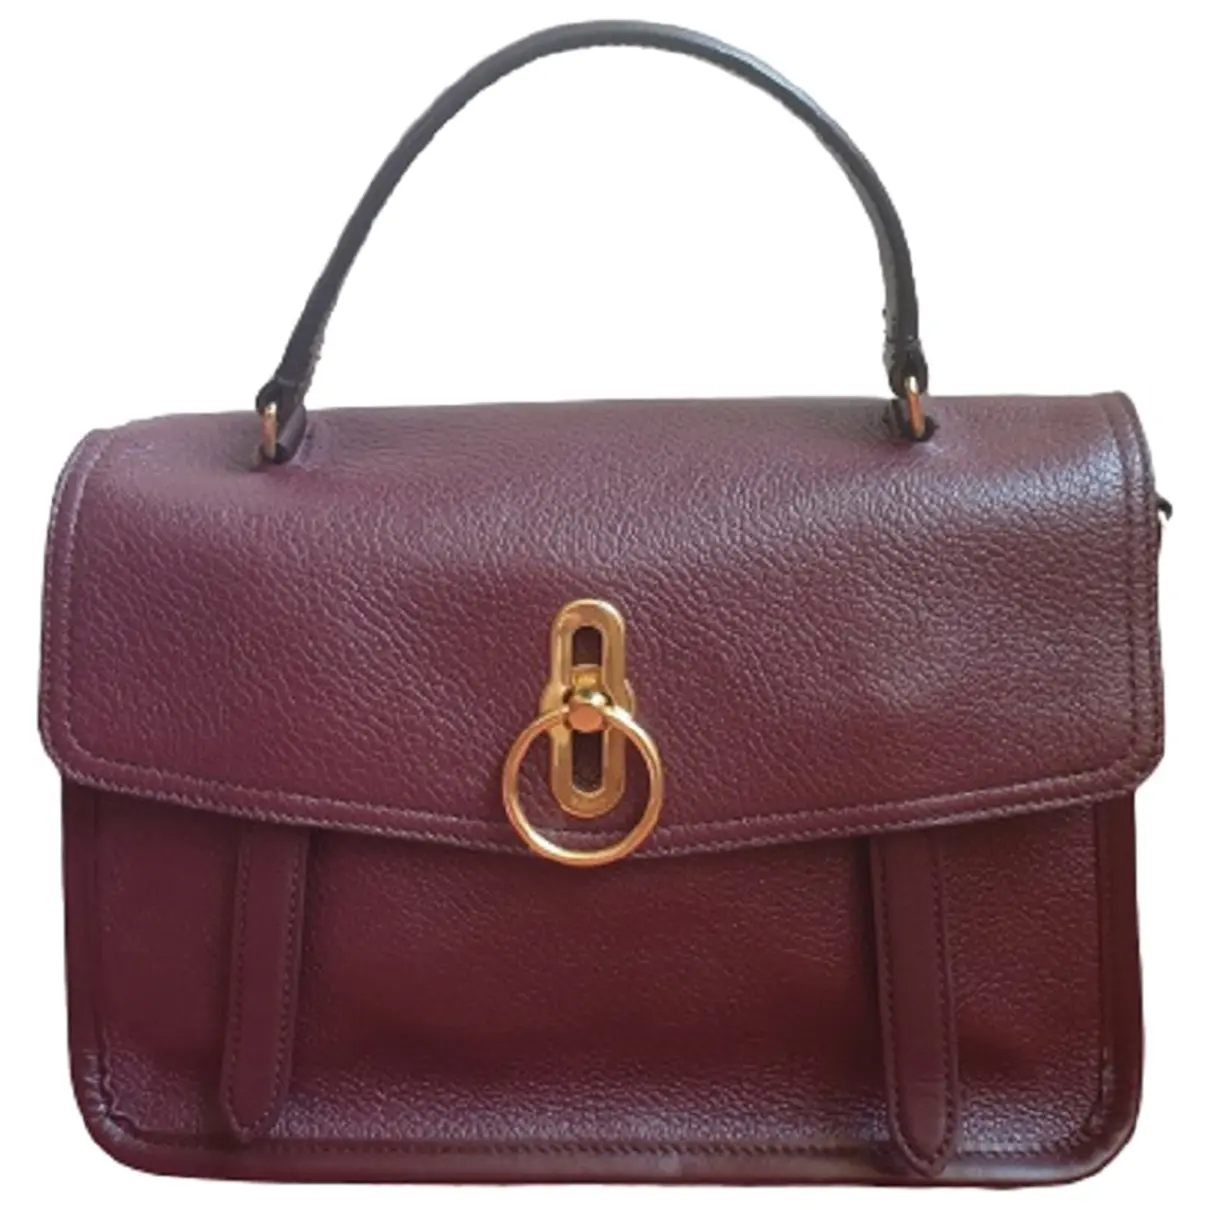 Gracy leather handbag Mulberry